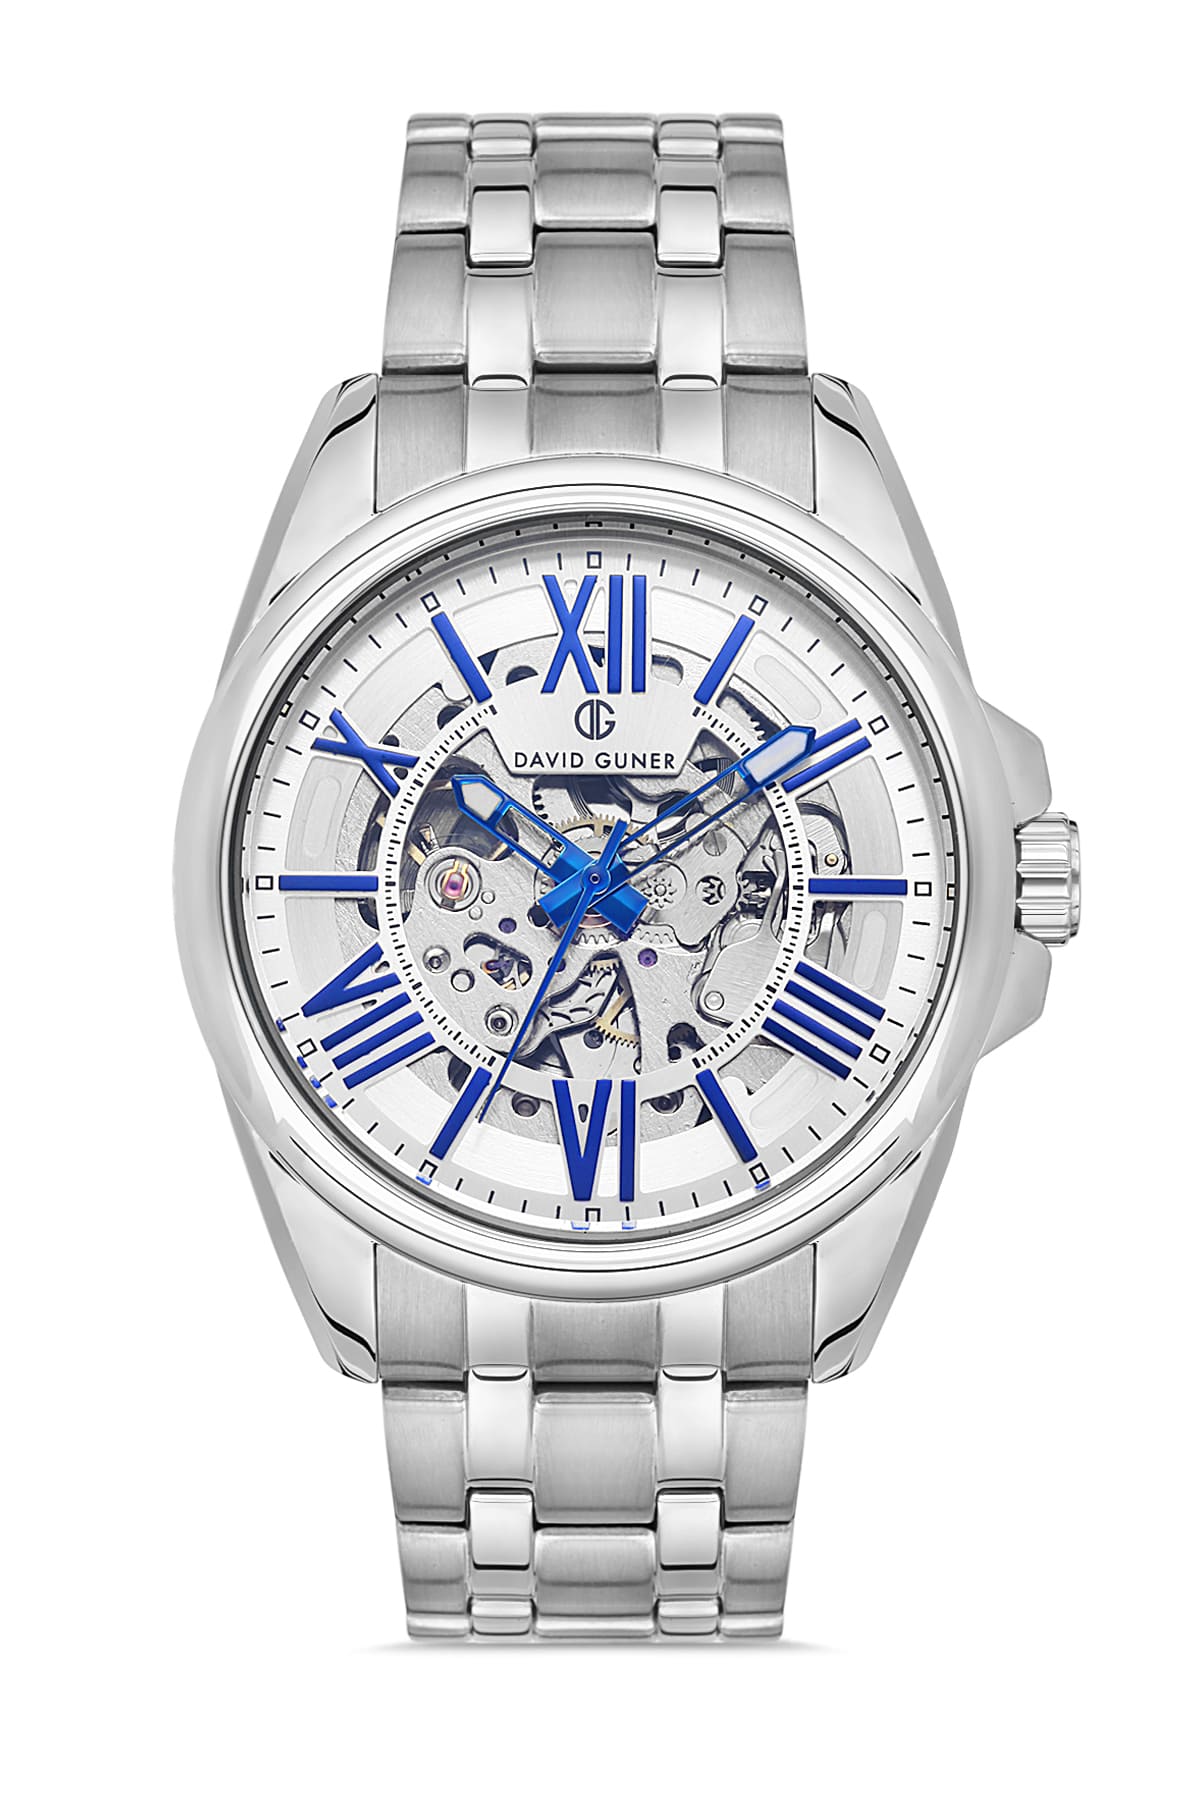 DAVID GUNER Roman Numeral Automatic Function Men's Wristwatch